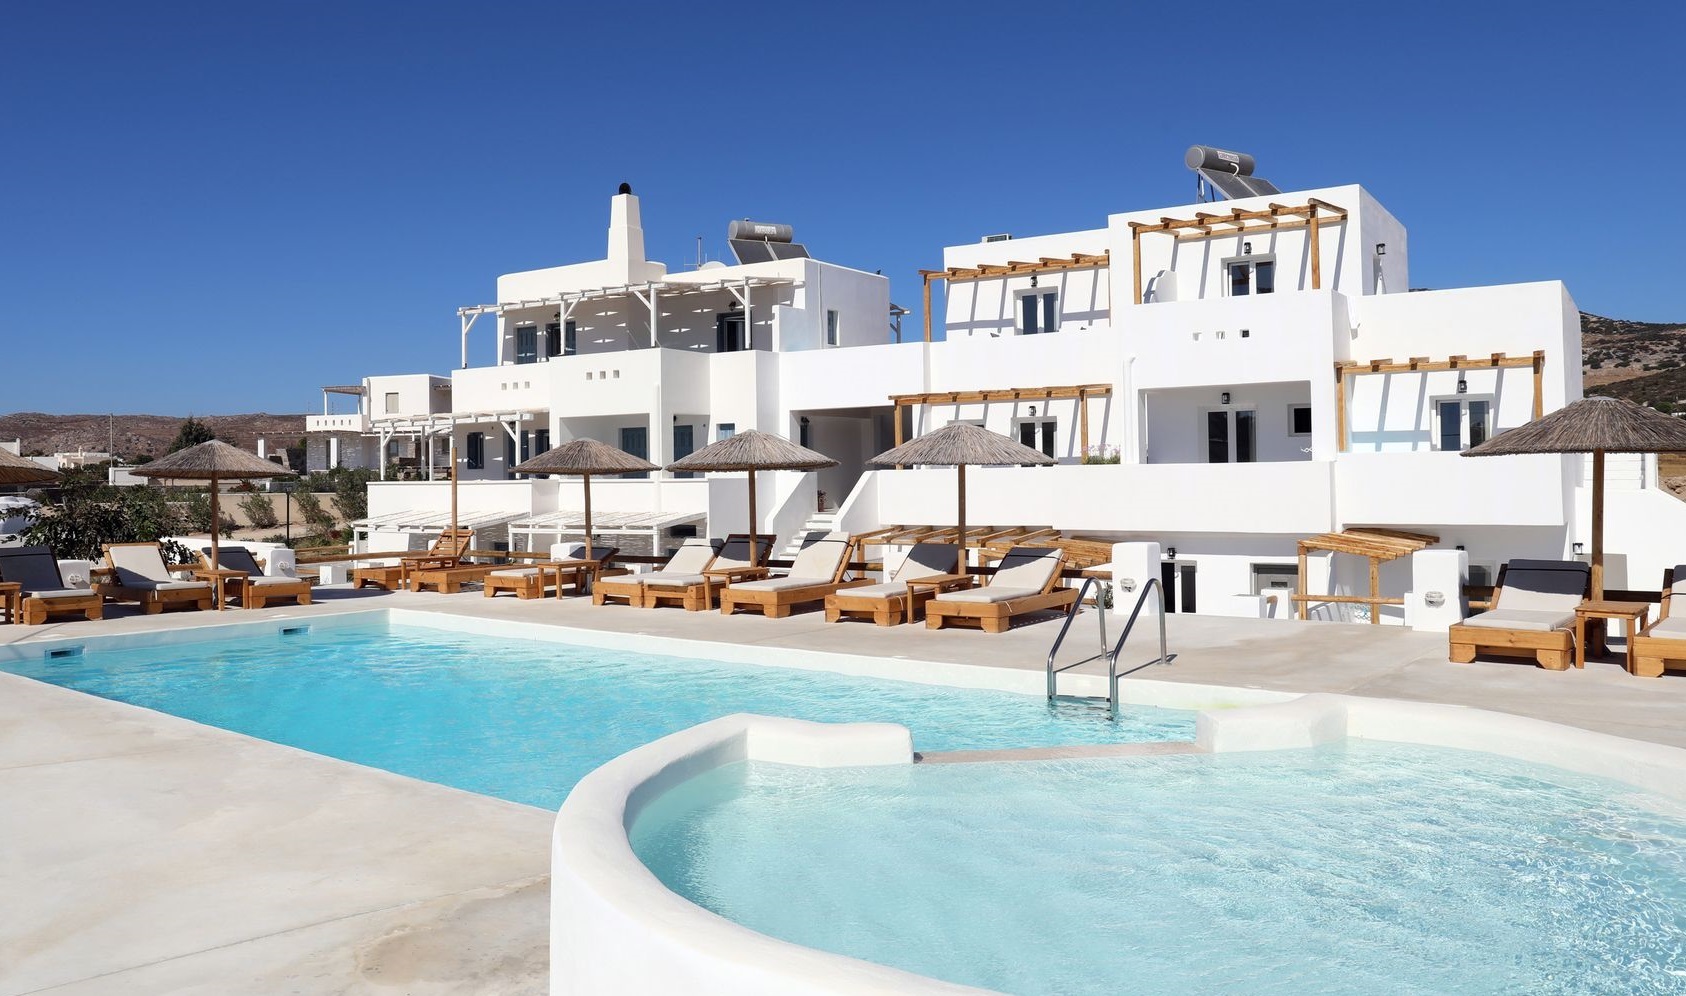 Irida Luxury Apartments - Καστράκι, Νάξος ✦ -5% ✦ 4 Ημέρες (3 Διανυκτερεύσεις) ✦ 2 άτομα ✦ 2 ✦ 01/07/2022 έως 31/08/2022 ✦ Κοντά σε παραλία!